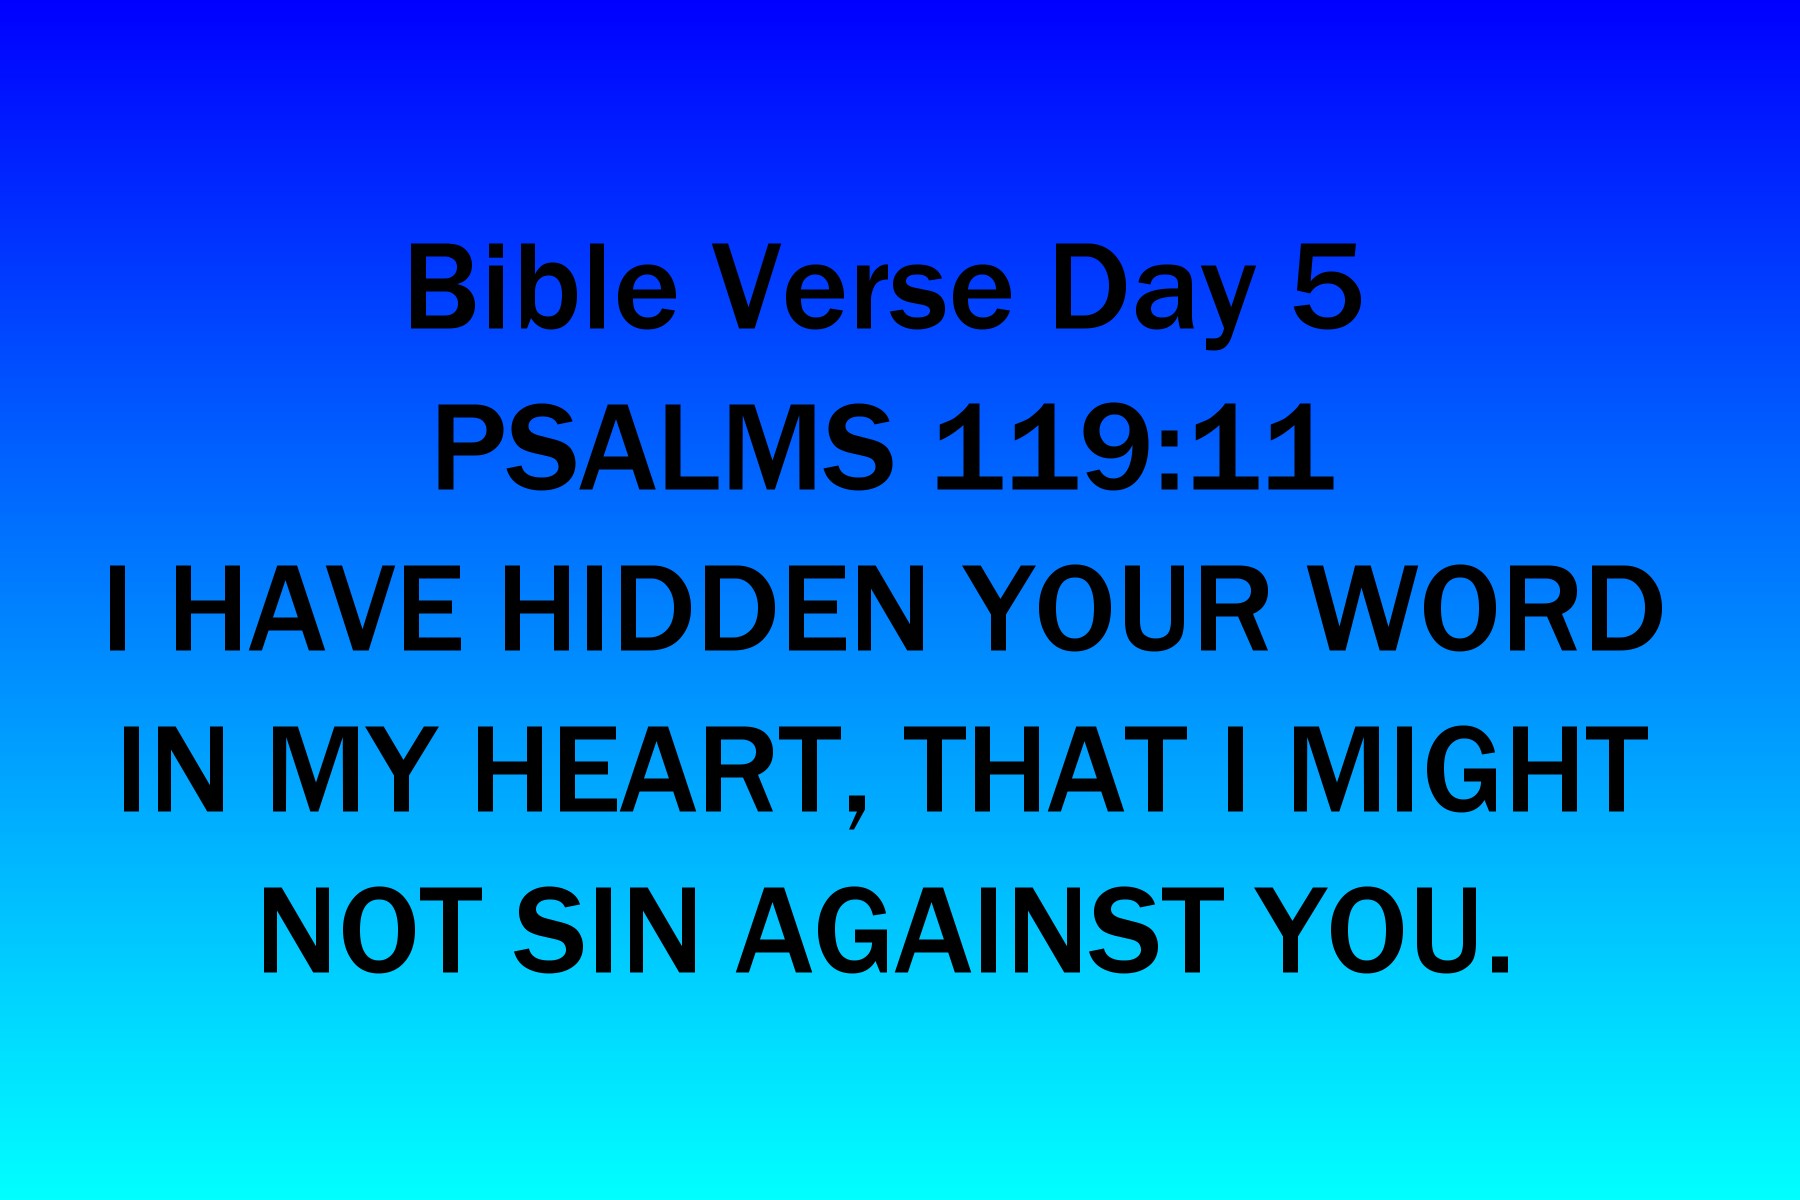 Bible Verse, Psalms 119:11